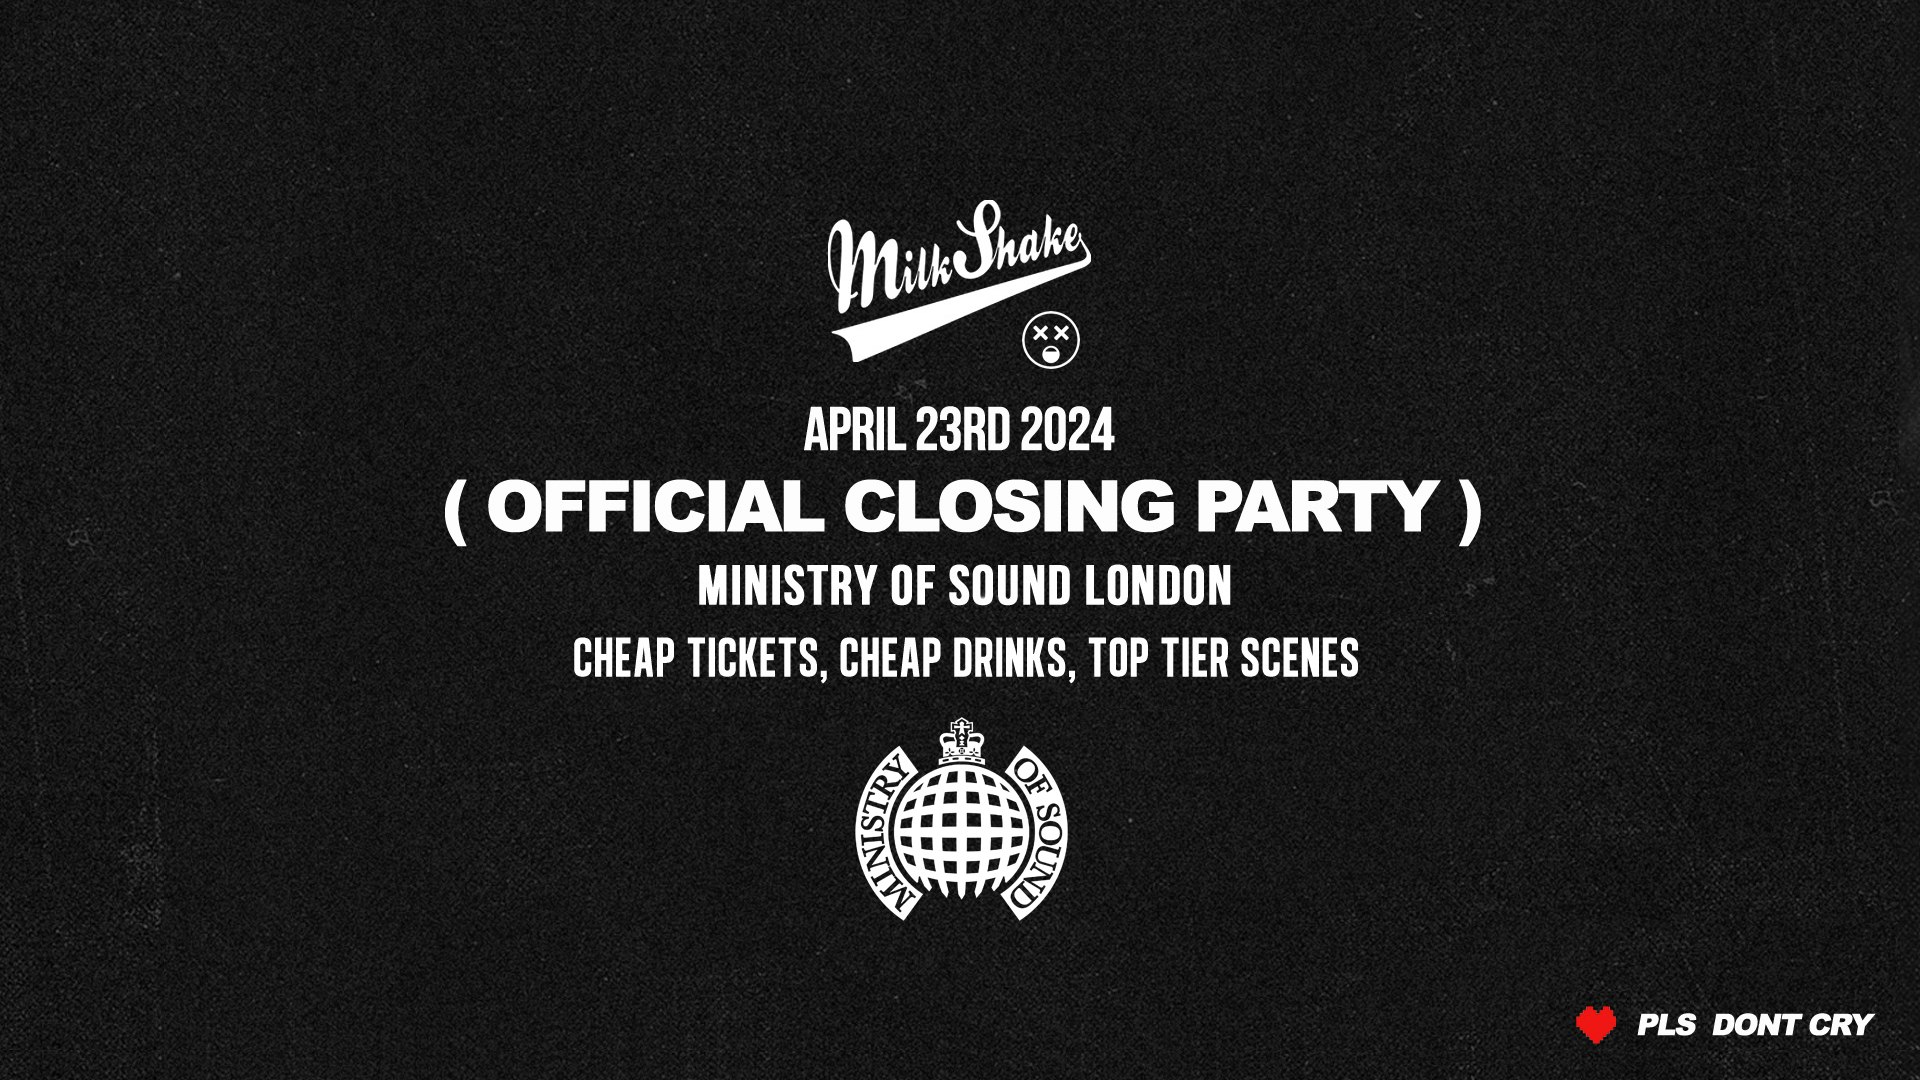 TONIGHT 10:30PM – Milkshake, Ministry of Sound | CLOSING PARTY… 🔥April 23rd 🌍